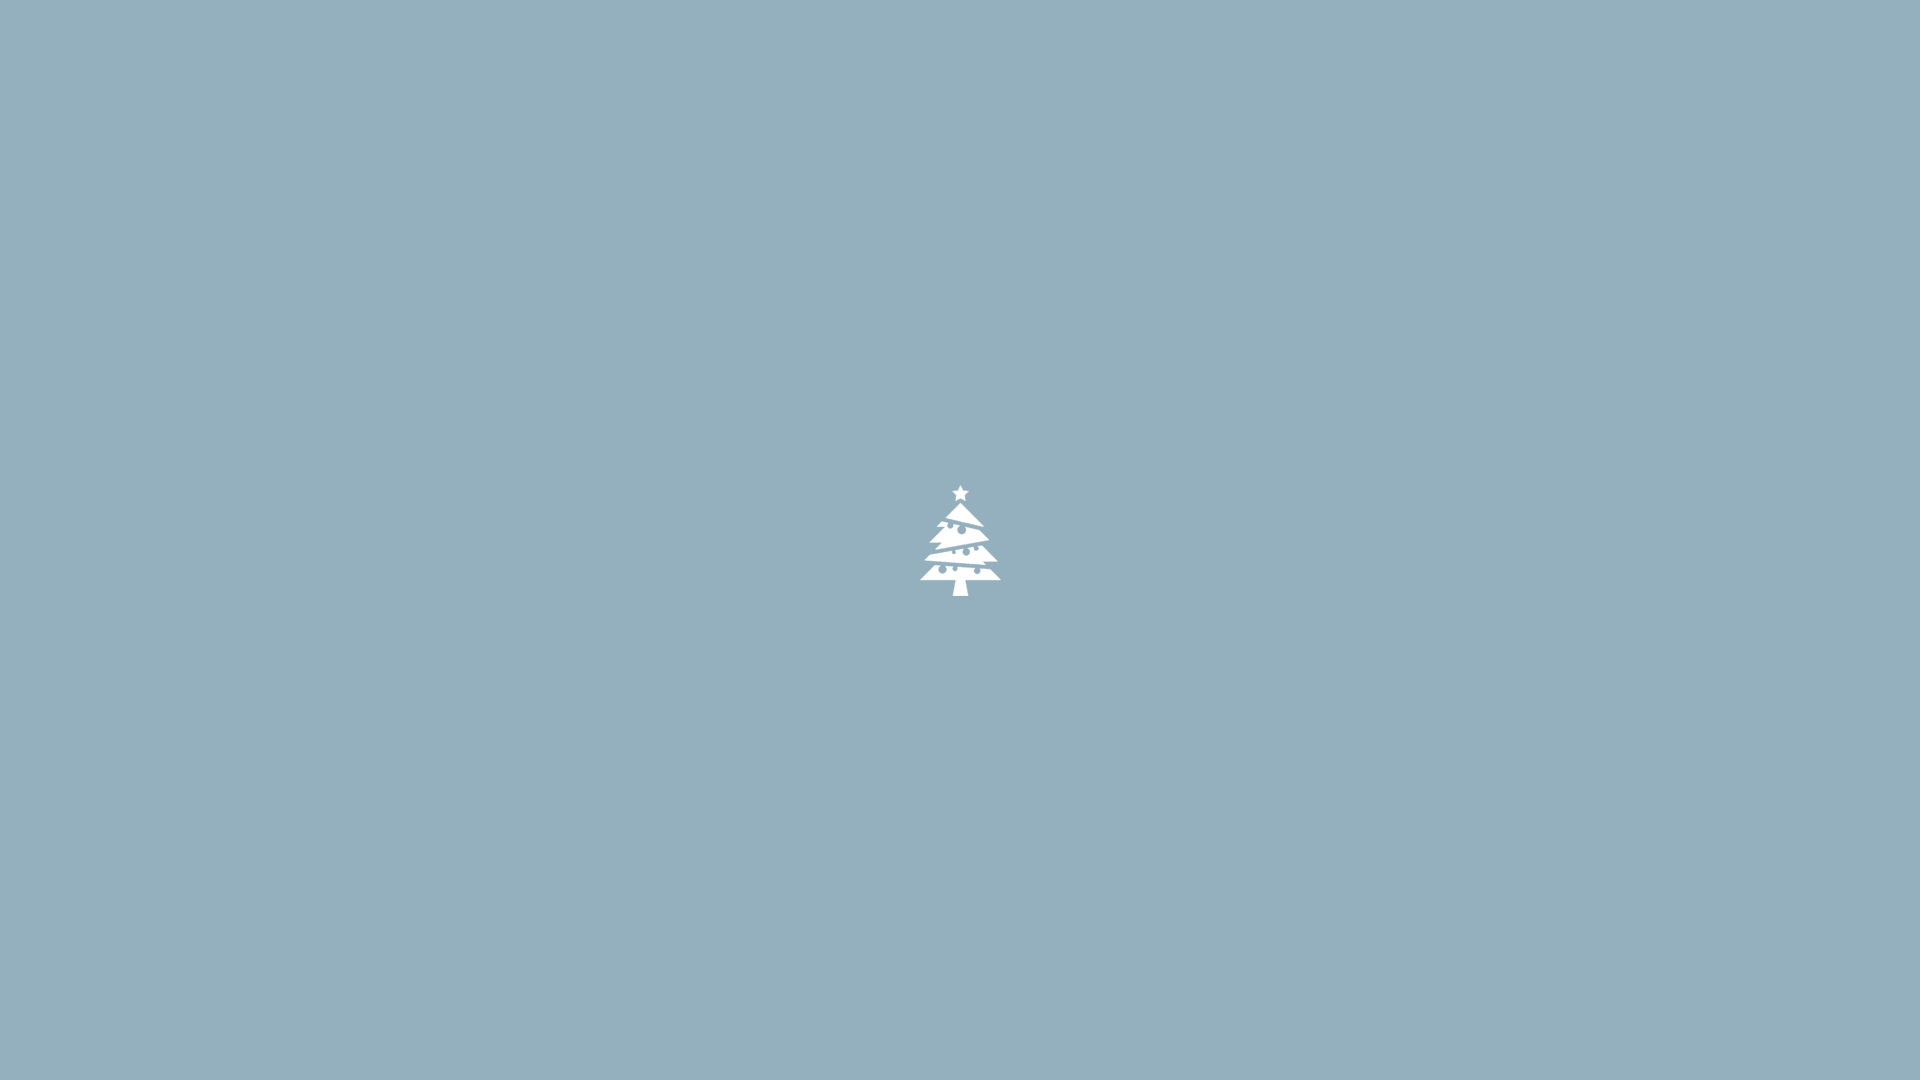 Minimalist Christmas Tree Wallpaper